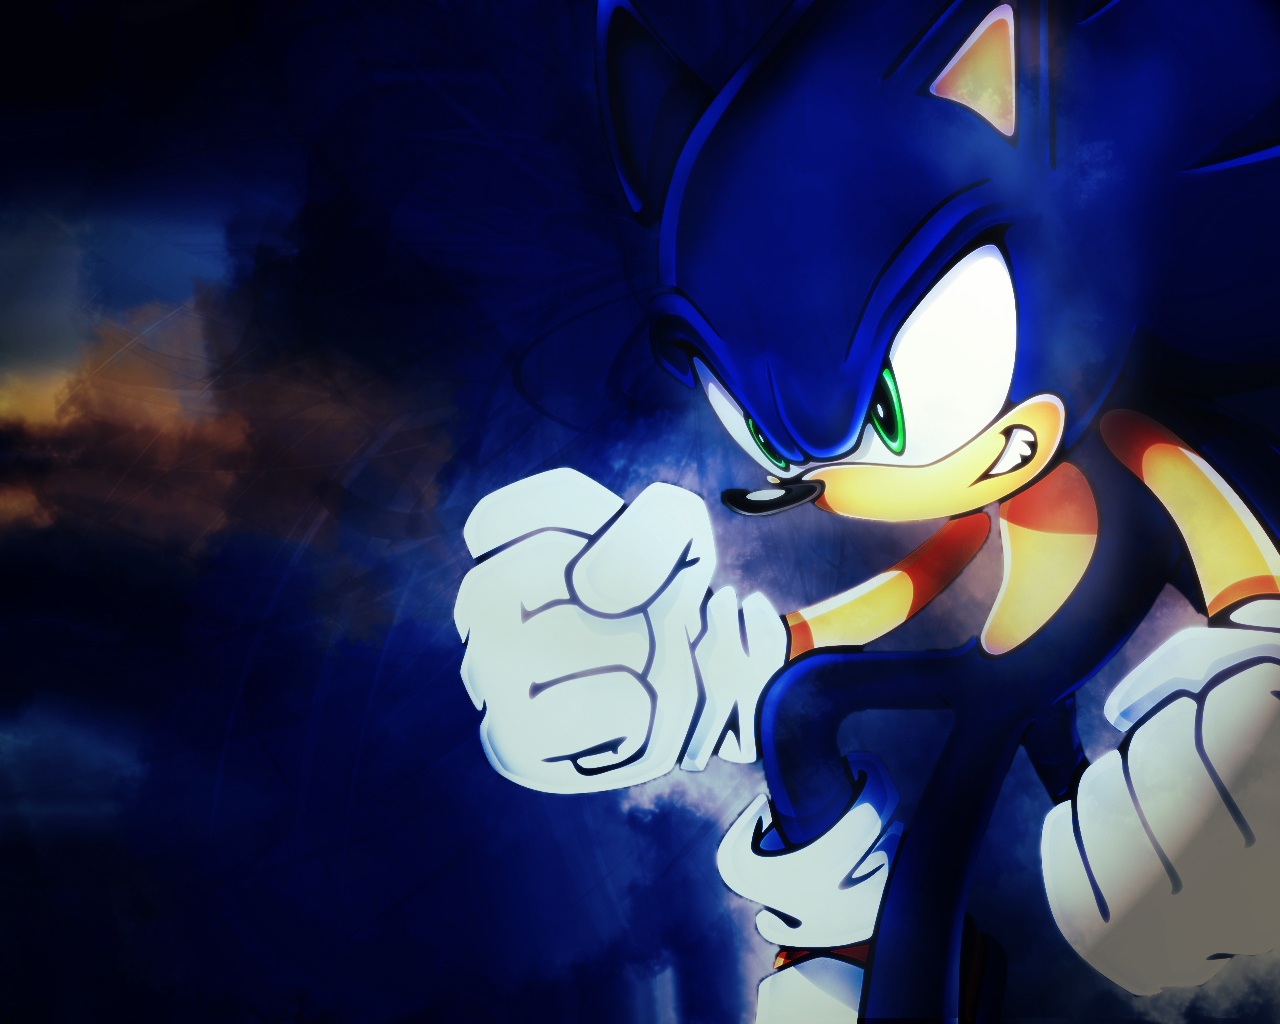 Cool Sonic The Hedgehog Wallpaper